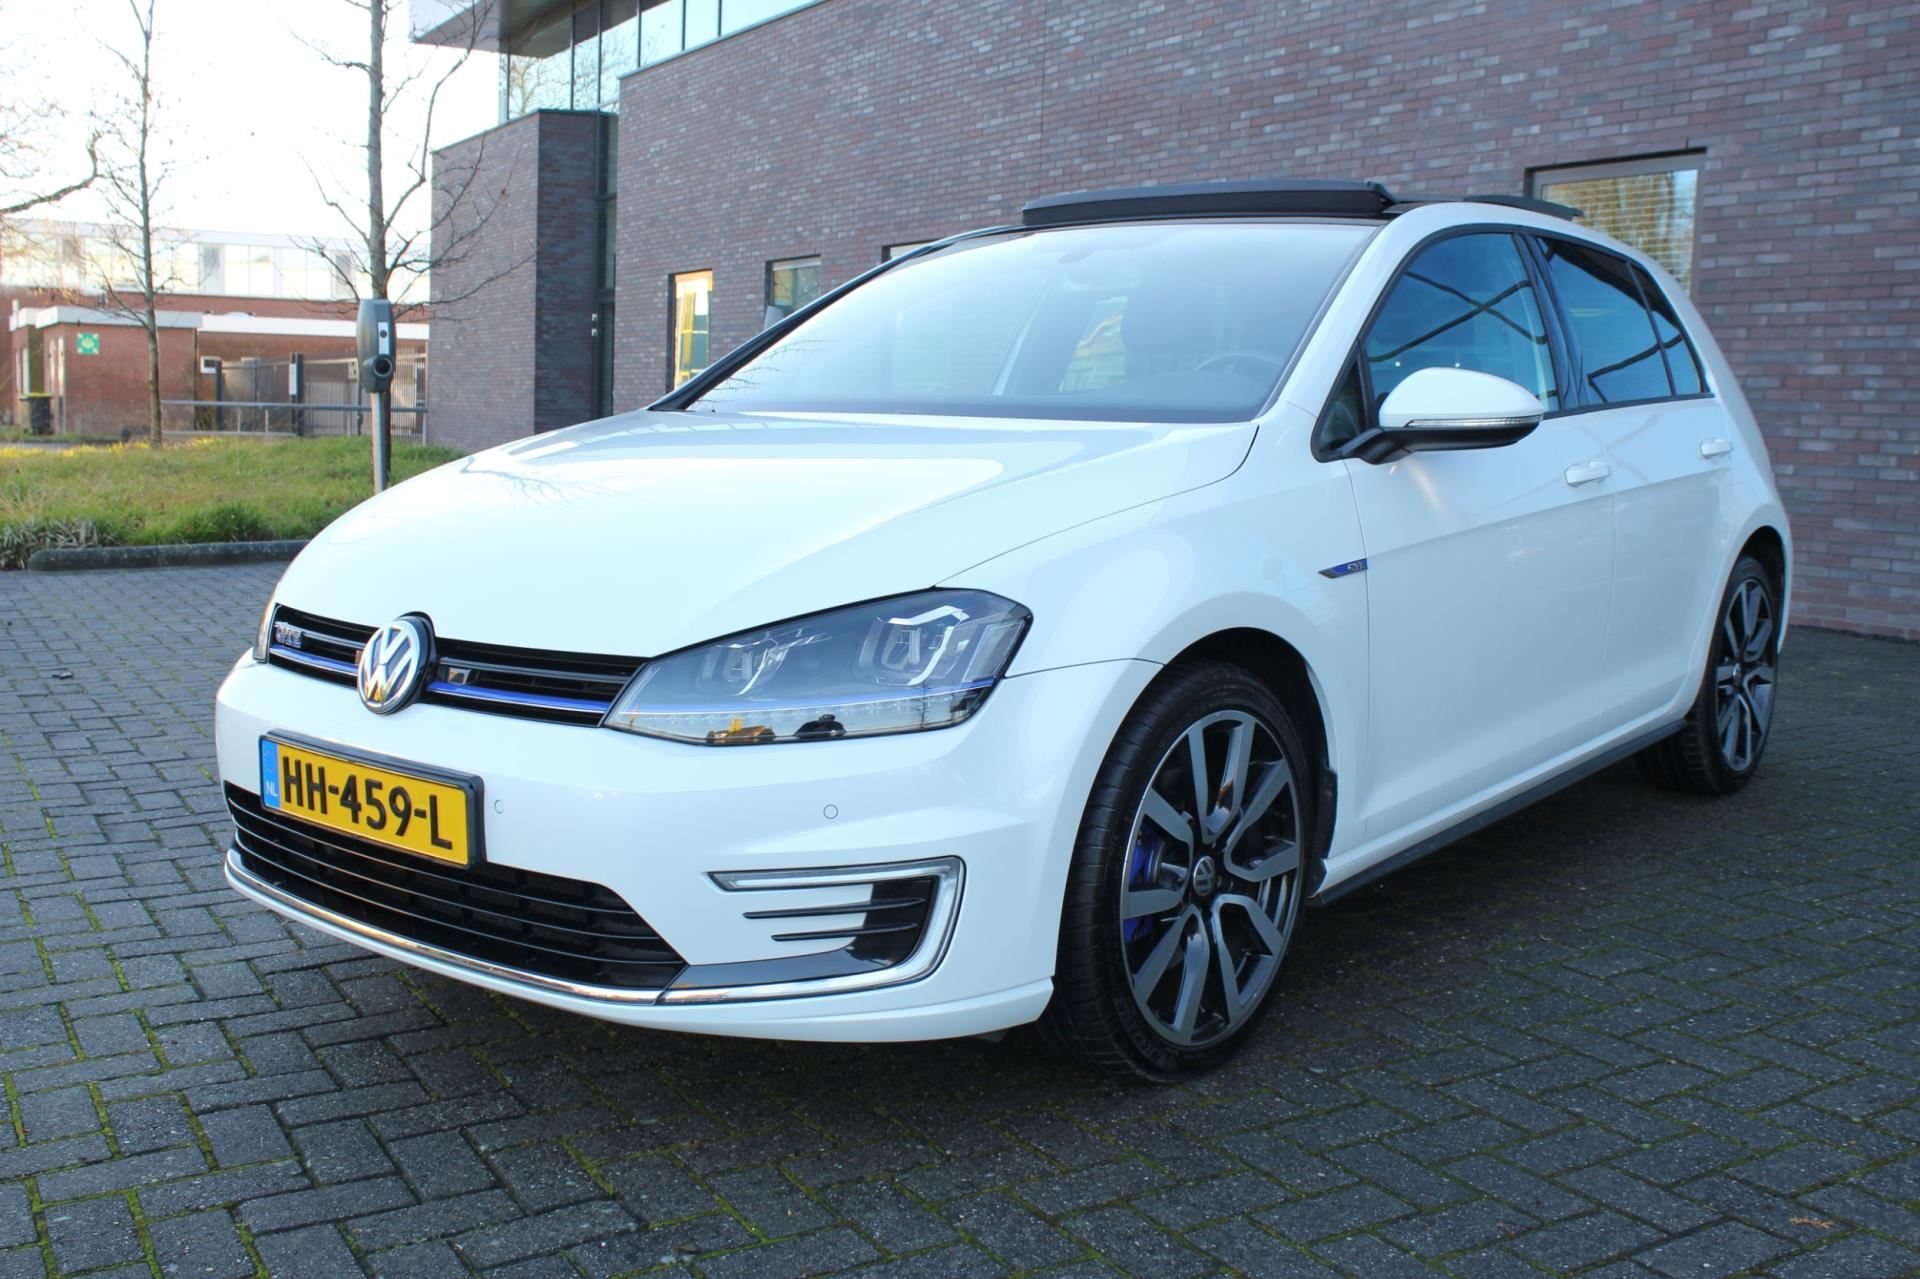 kom tot rust hoog Onvergetelijk Volkswagen Golf - 1.4 TSI GTE panoramadak Automaat,parelmoer wit Hybride  uit 2015 - www.garageautoflex.nl